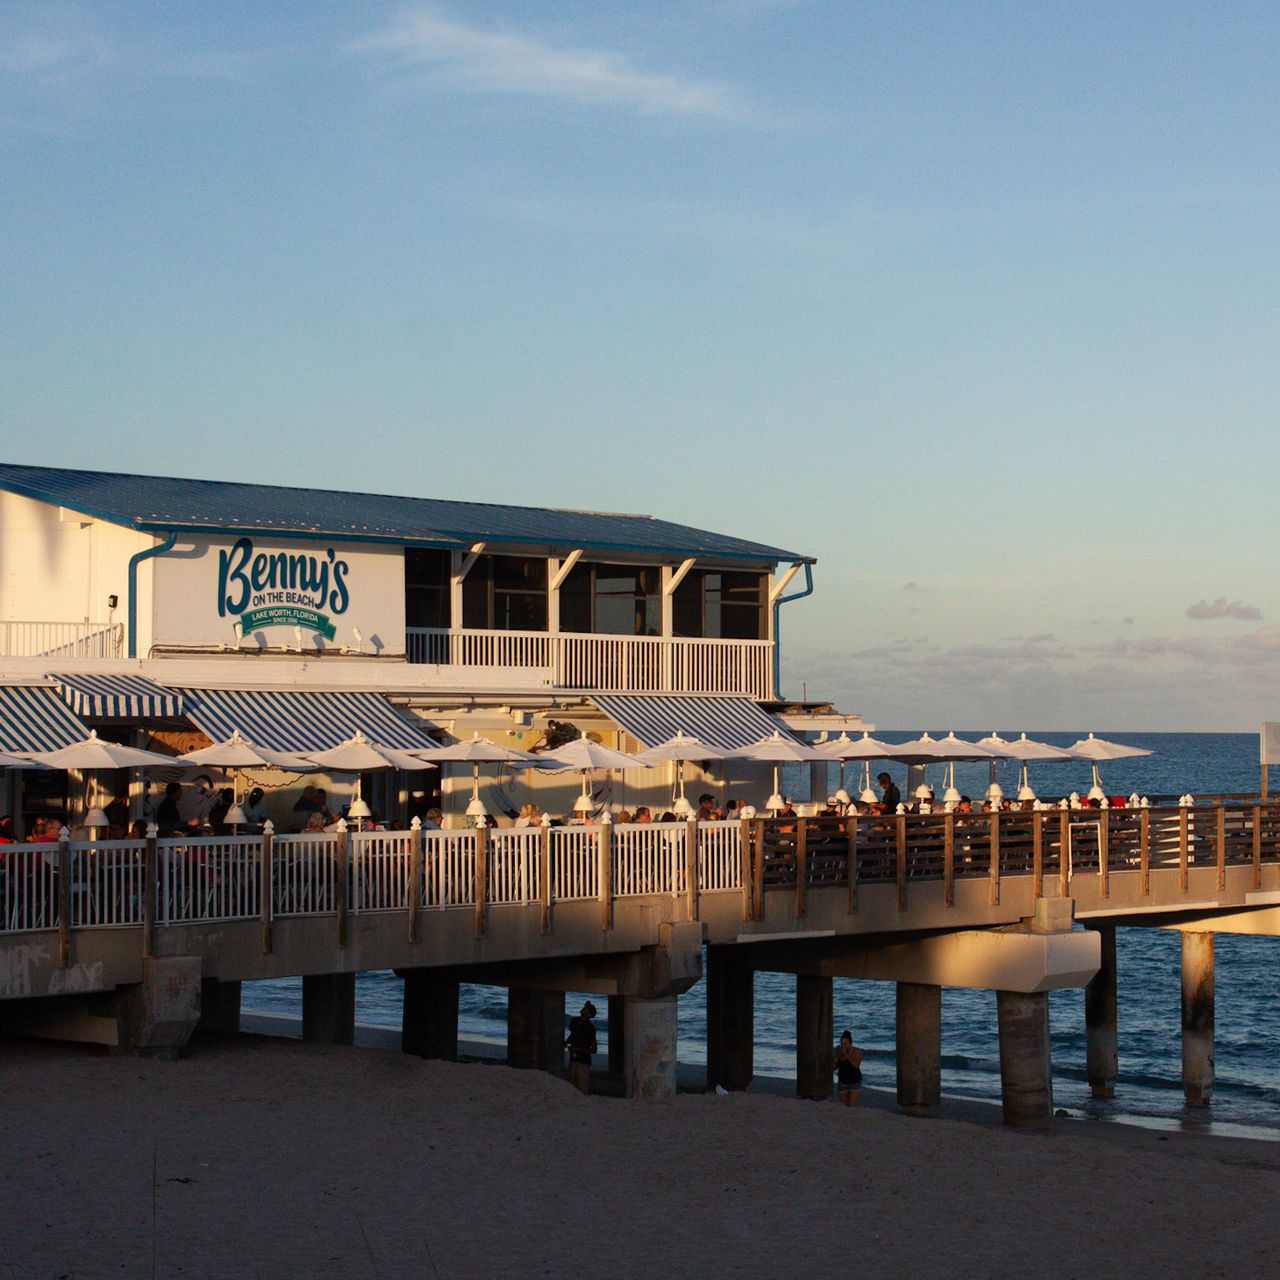 Benny's On The Beach - Pier Restaurant - Lake Worth, FL